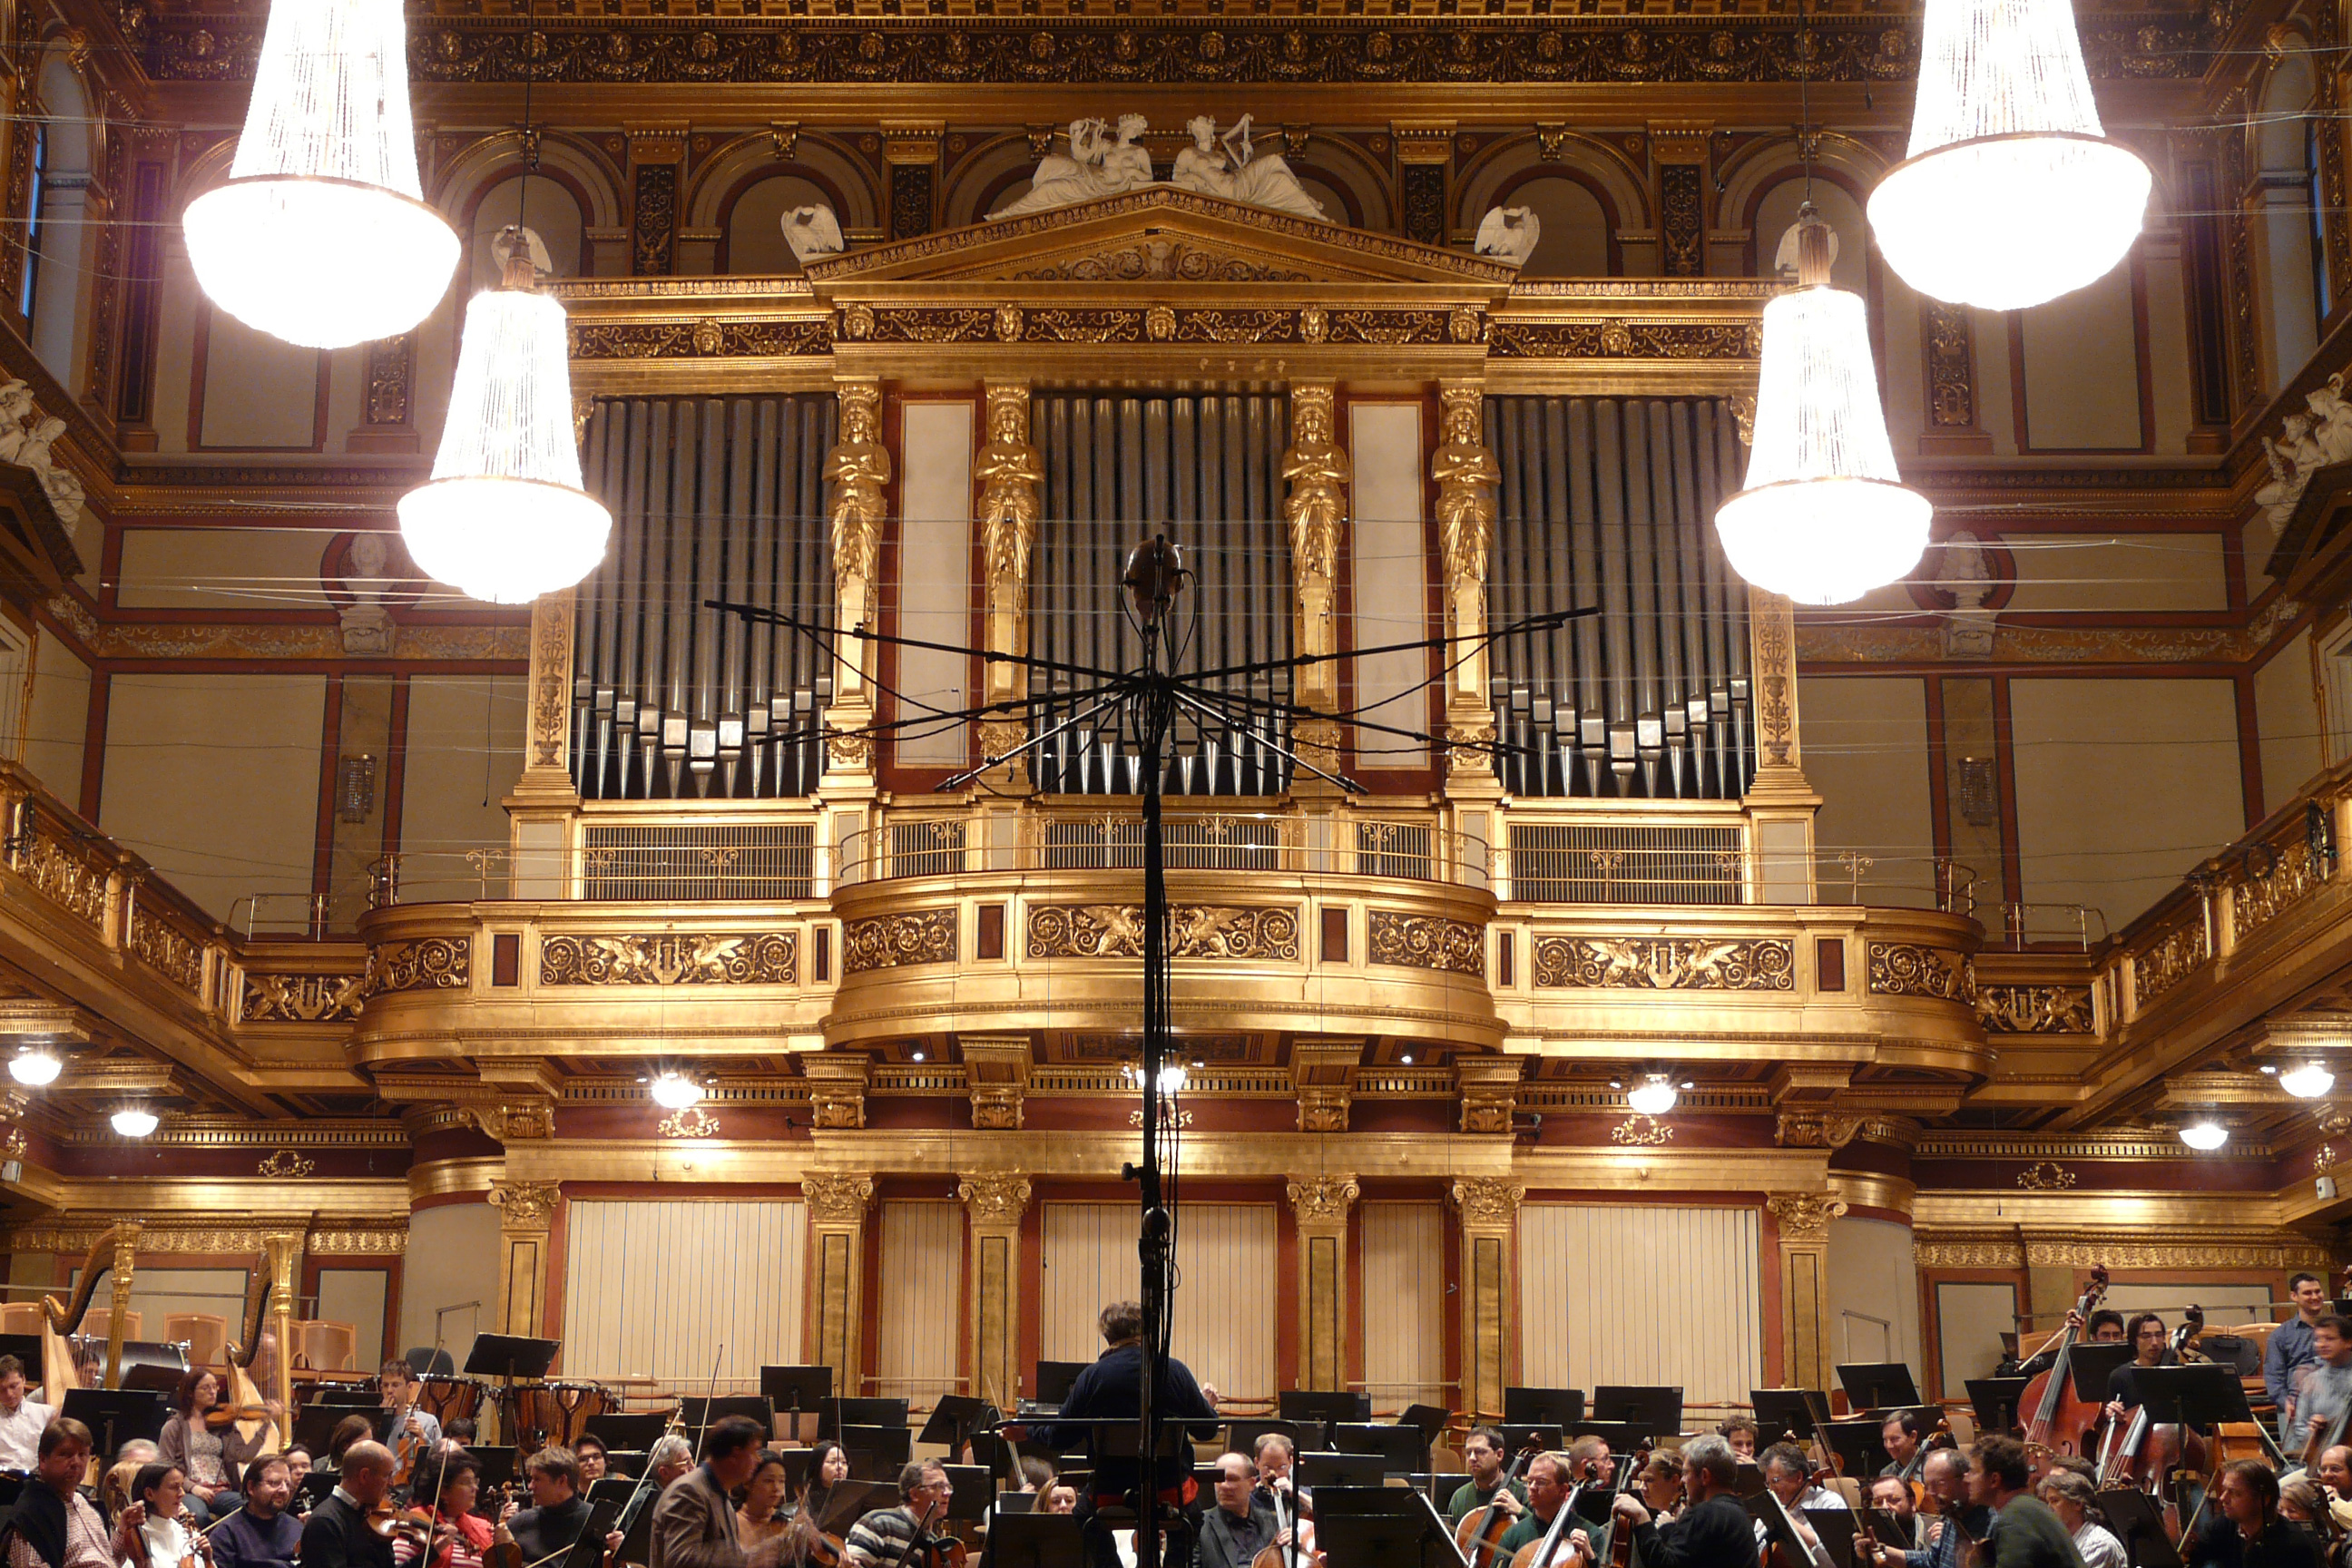 Orchestra-Recording in Vienna